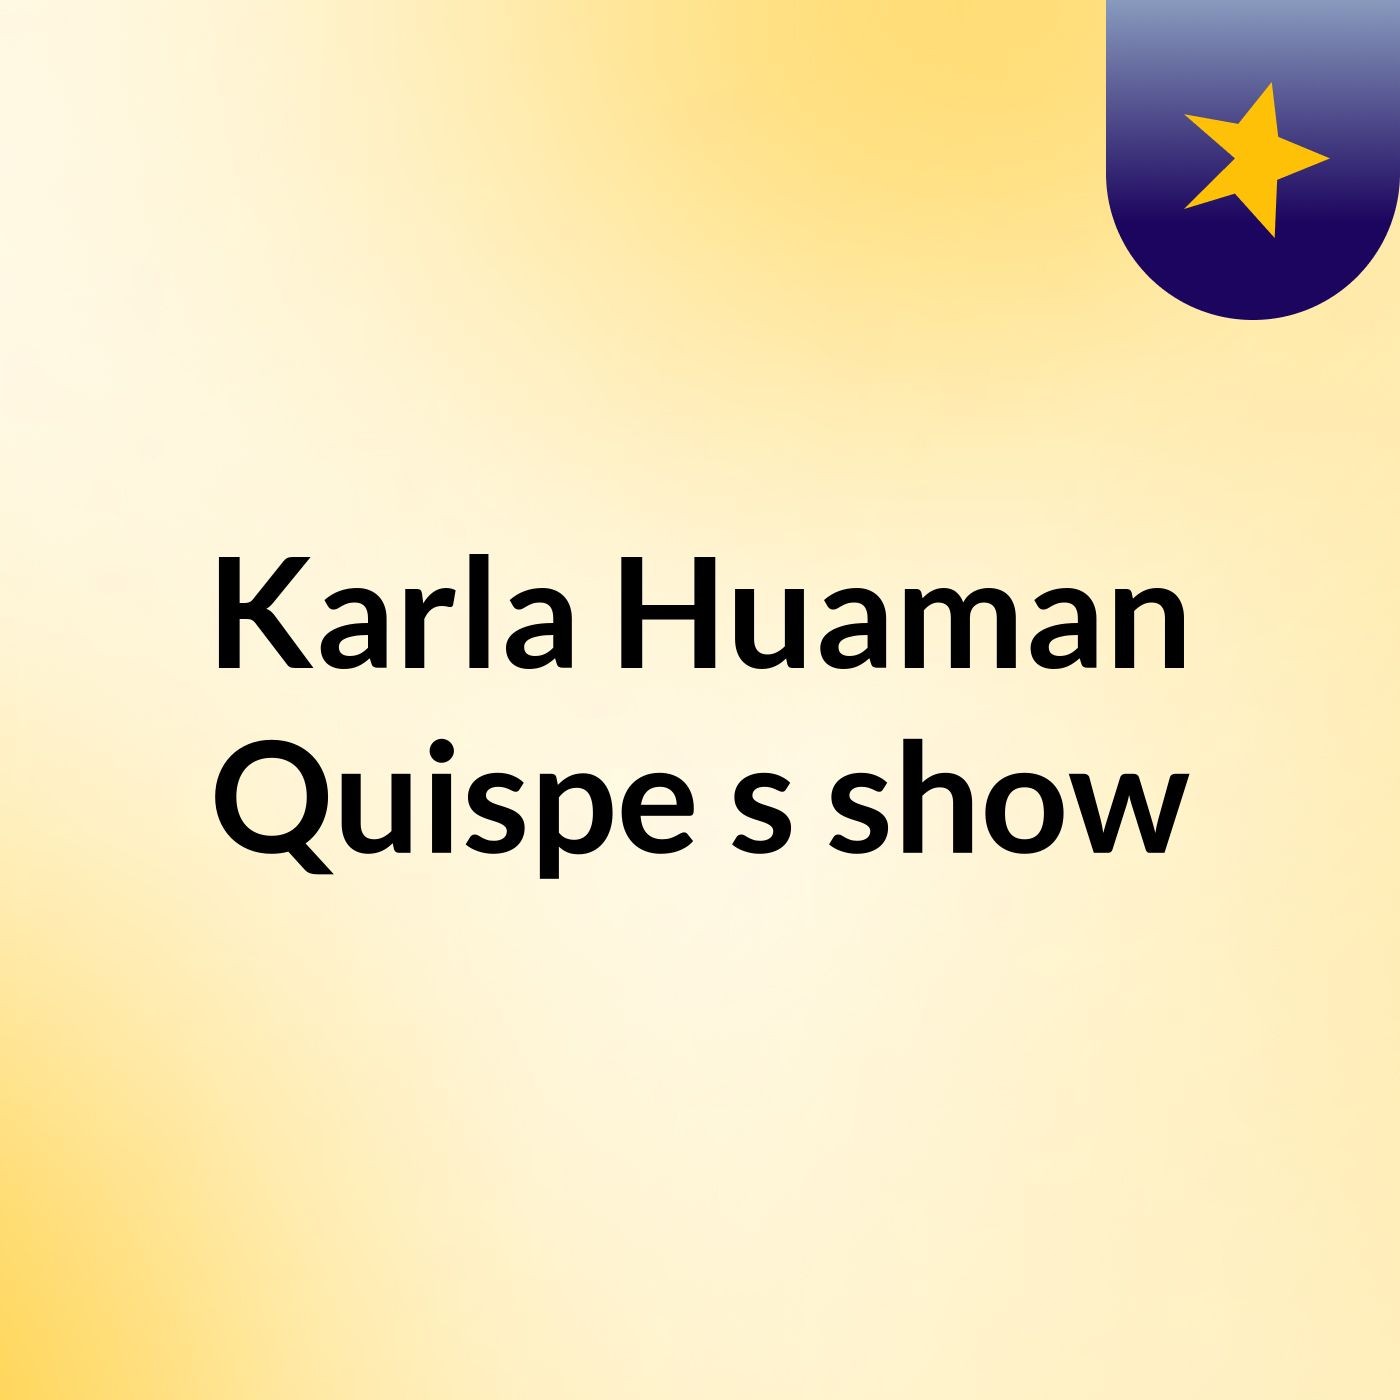 Karla Huaman Quispe's show